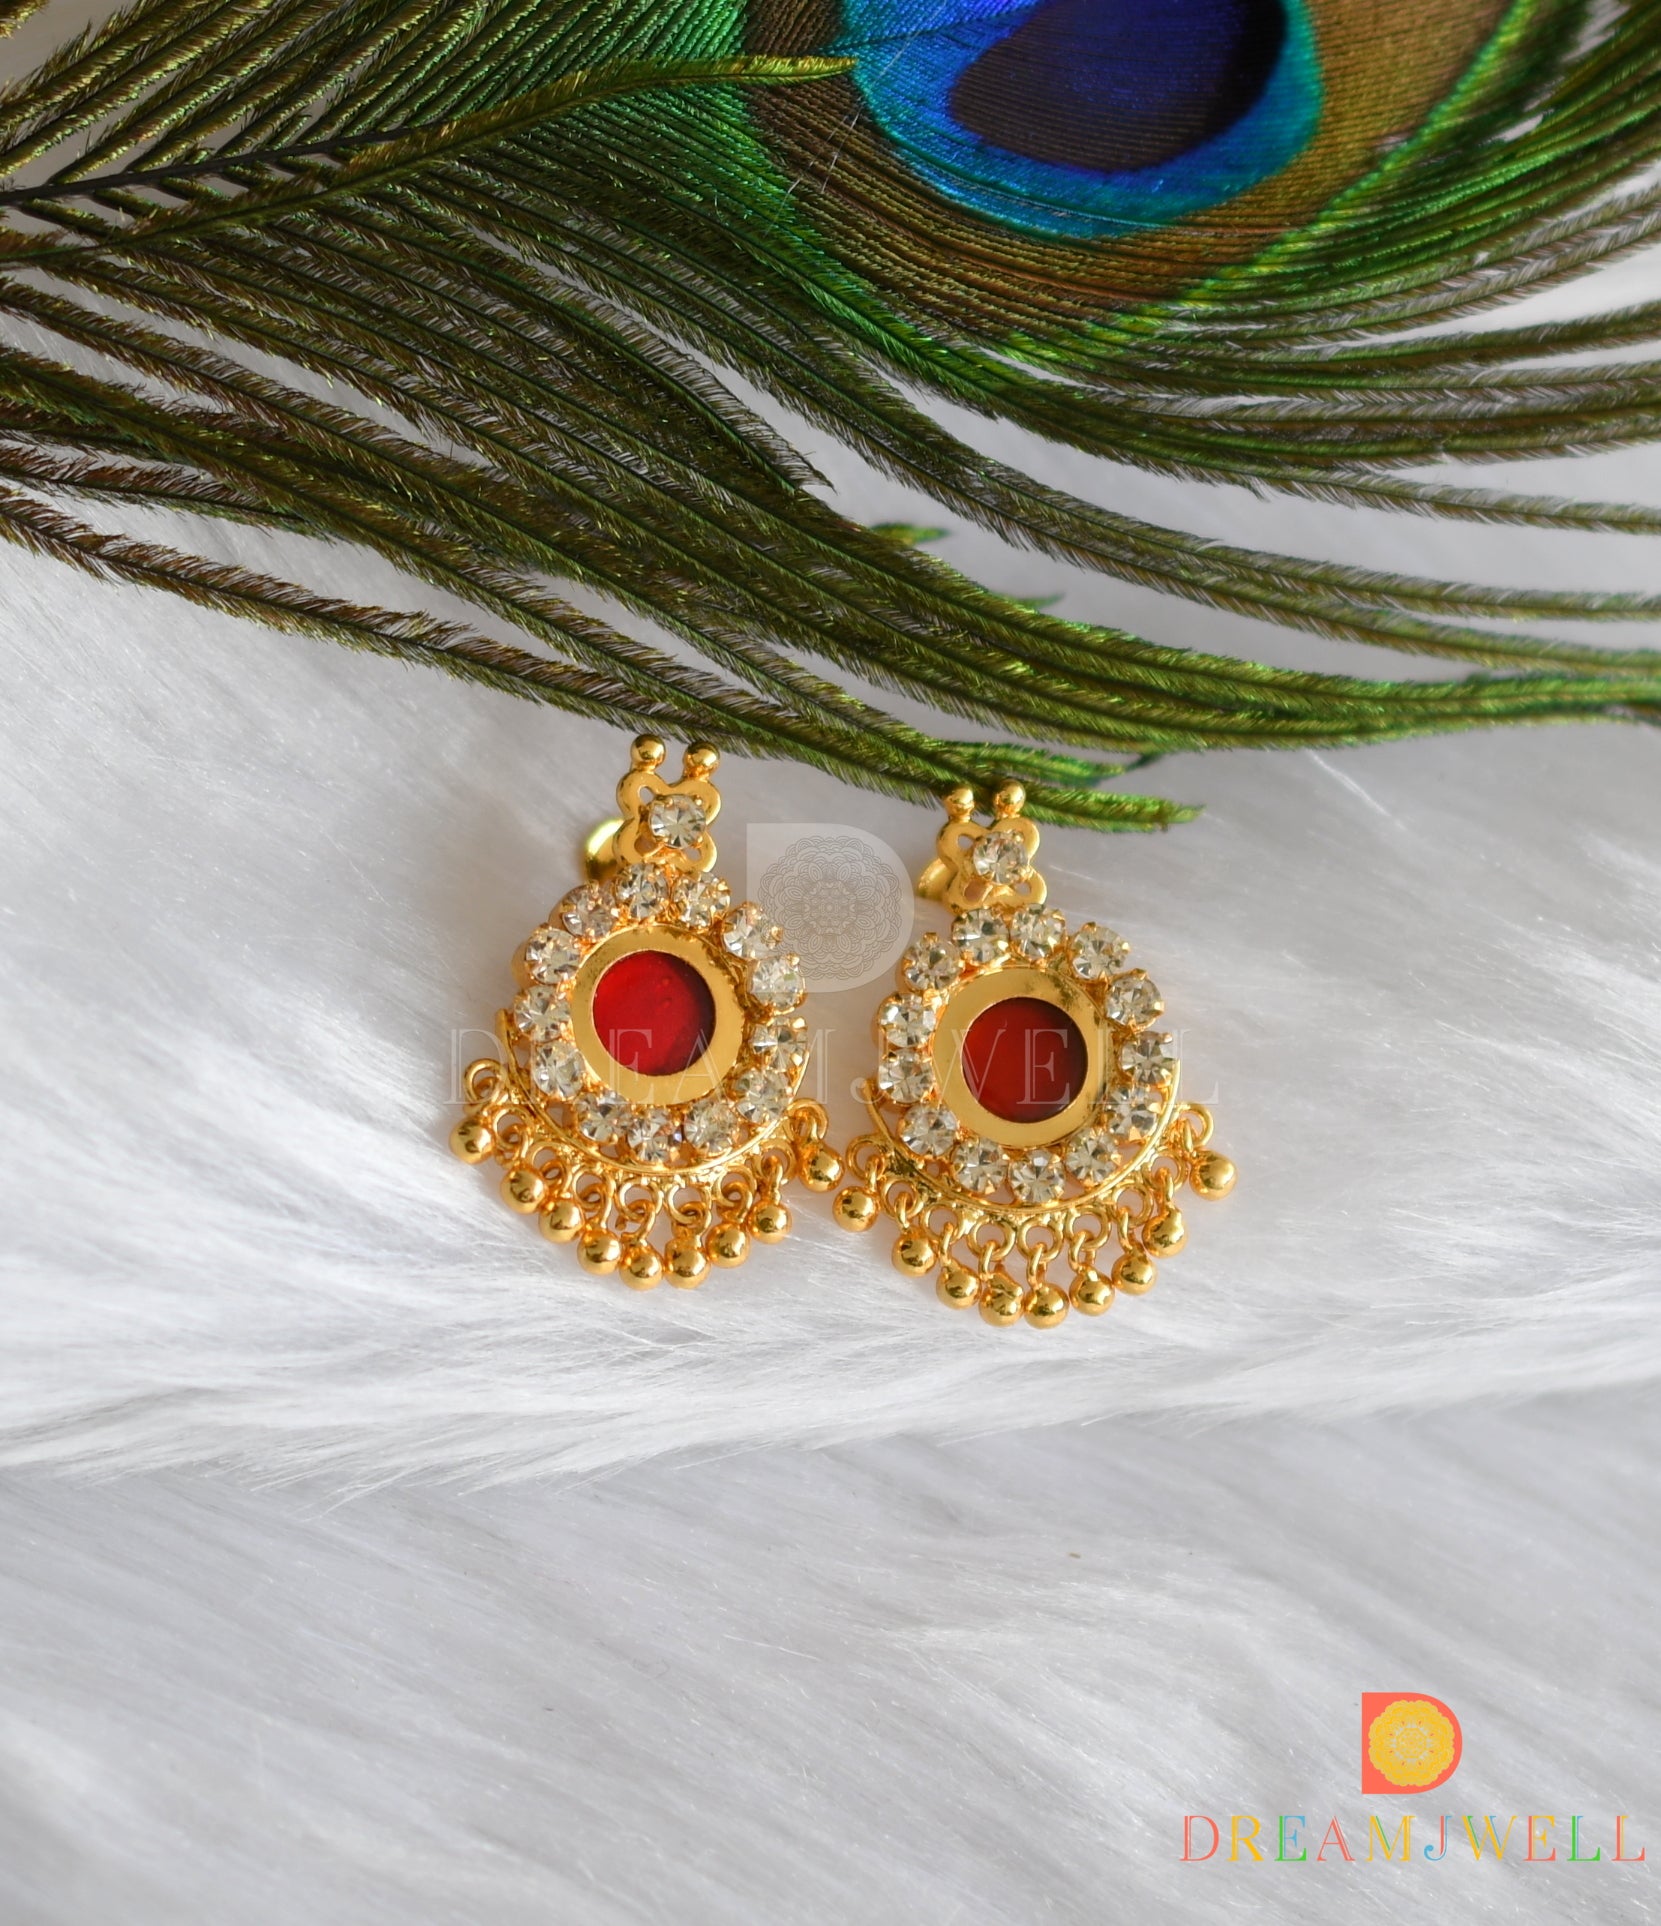 Antique White Stone Jewelry, Indian Jewelry, Fashion Wear